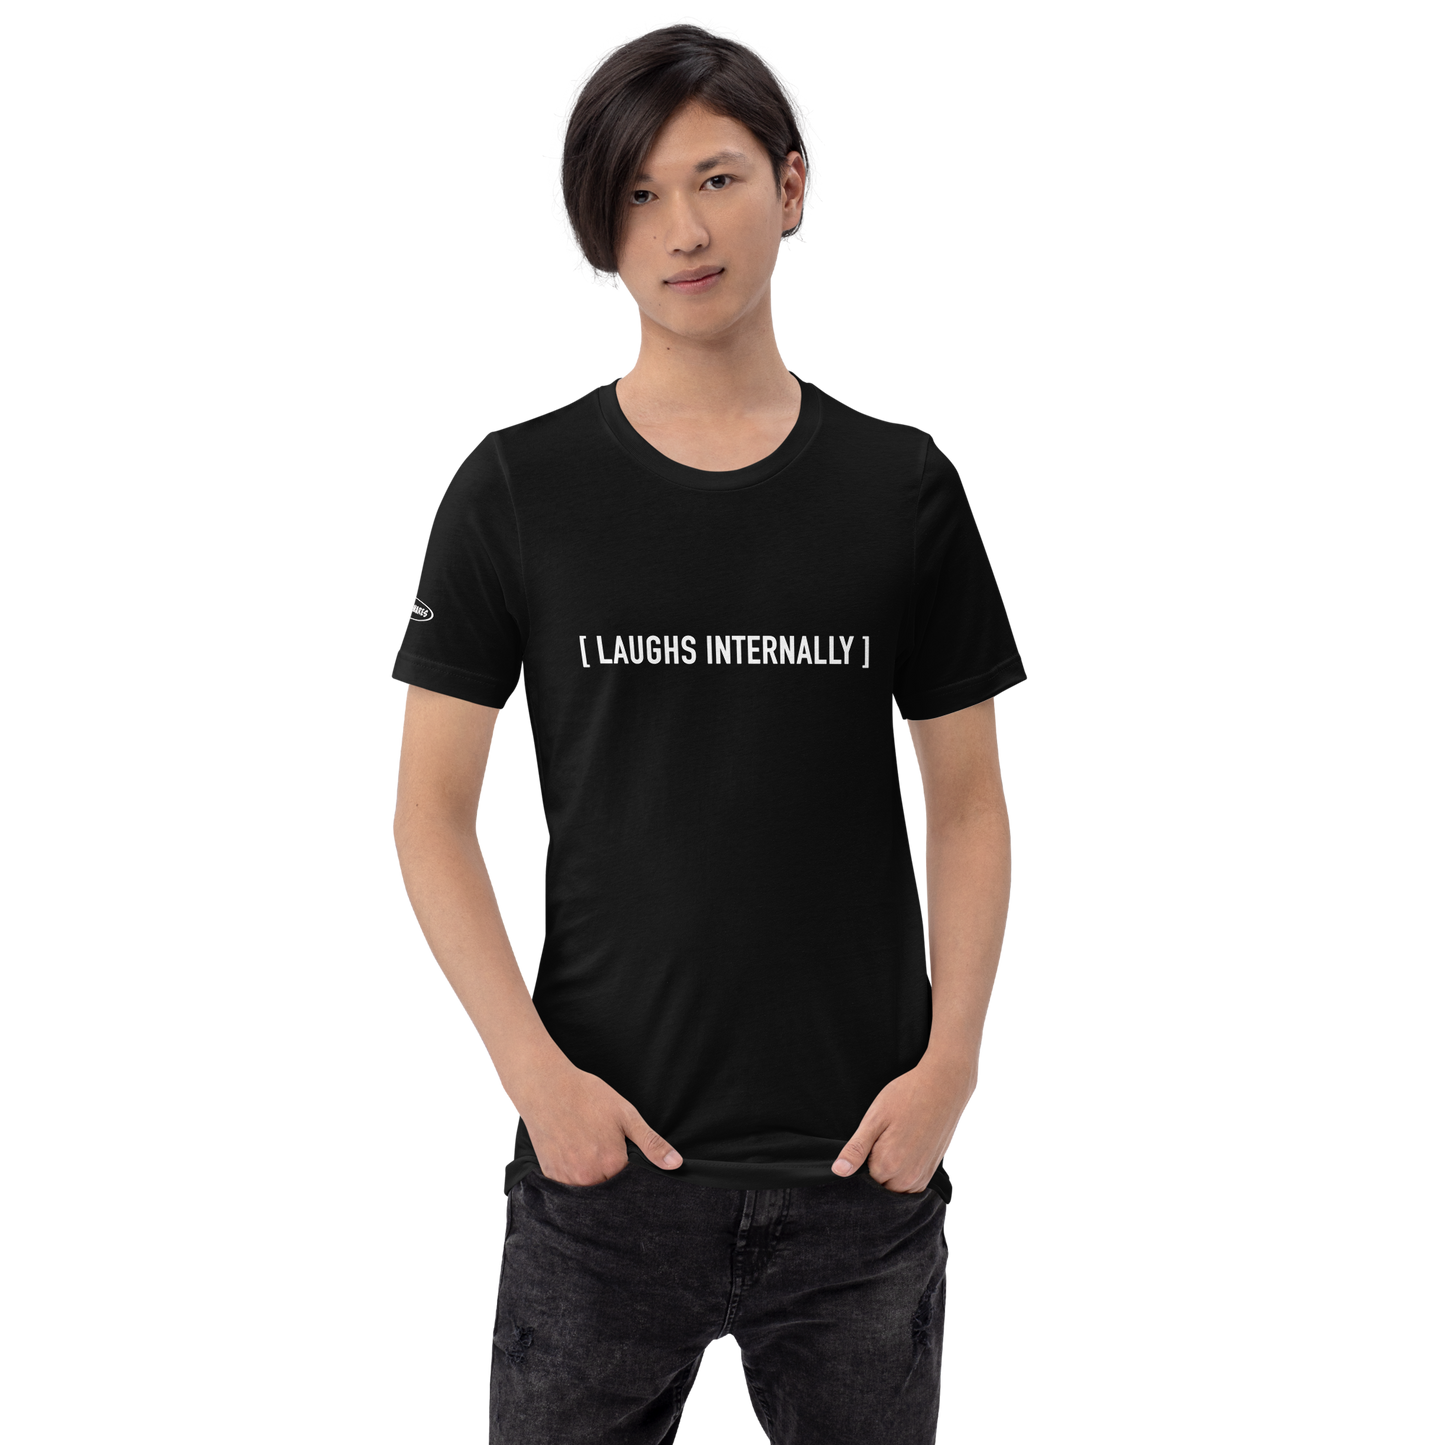 SUBTITLE - [Laughs Internally] - Funny T-Shirt